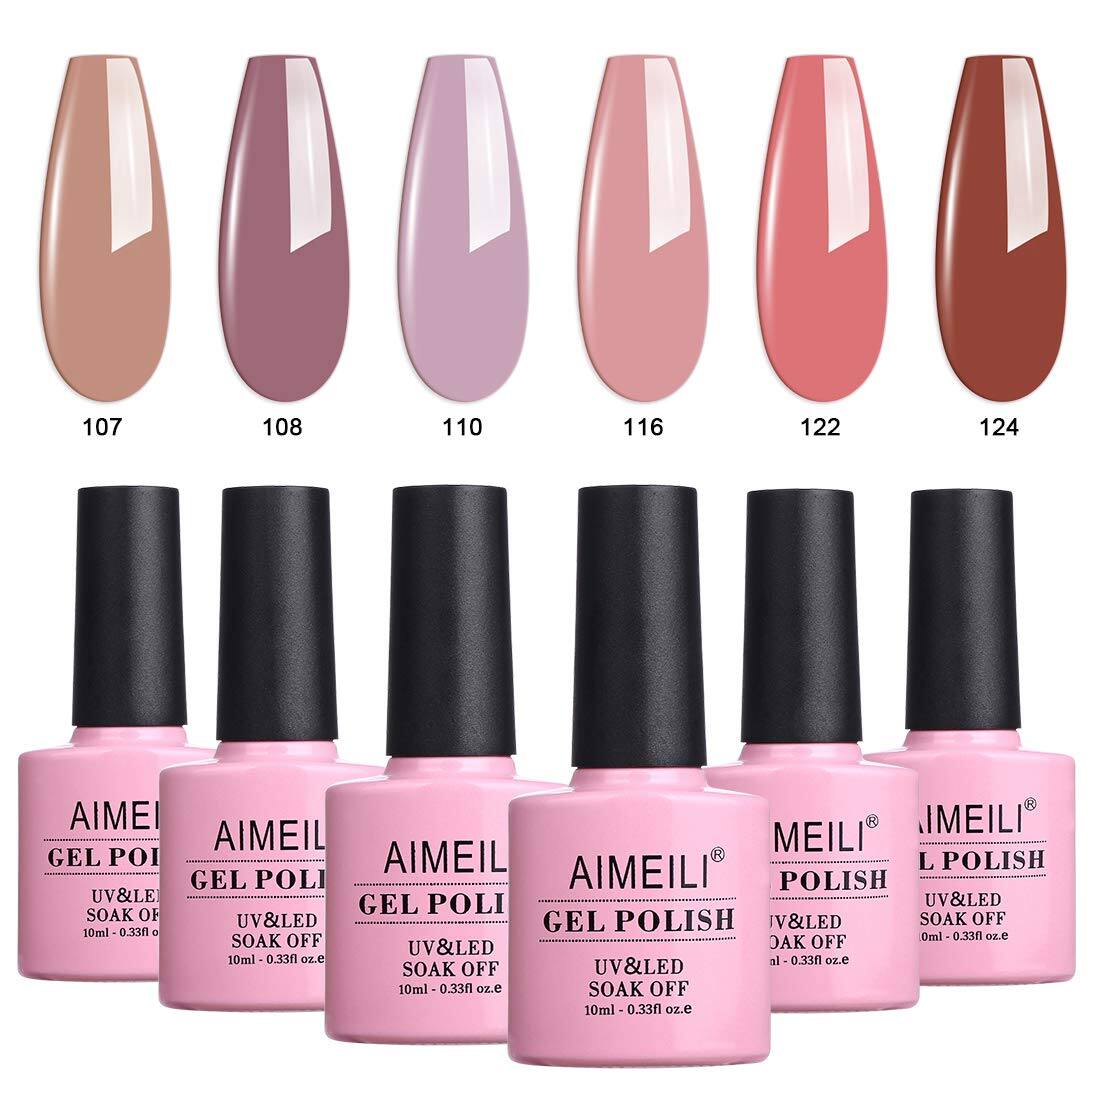 AIMEILI Gel Nail Polish Color Set Of 6pcs X 10ml - Kit 30 for - $10.79 + Free Shipping w/ Amazon Prime or Orders $25+